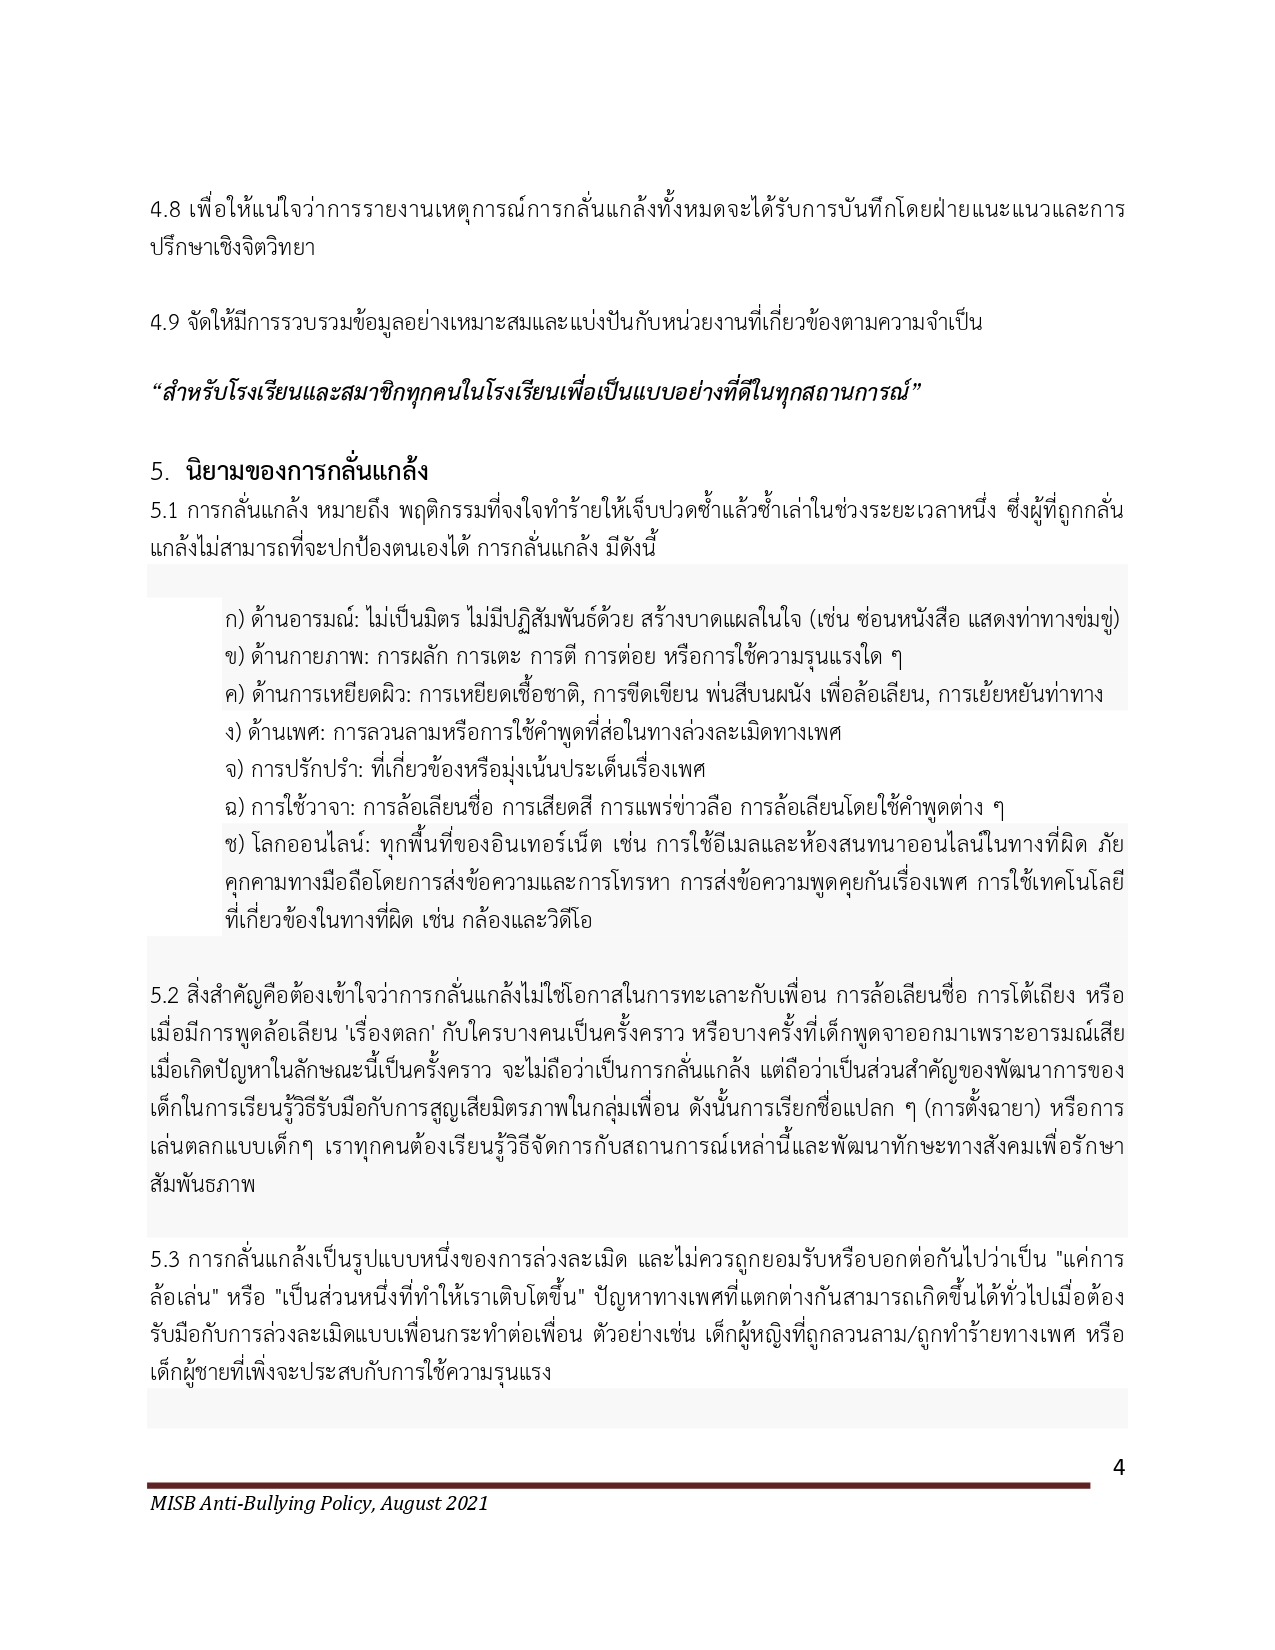 Anti Bullying Policy 2021 2023 Thai Language page 0006